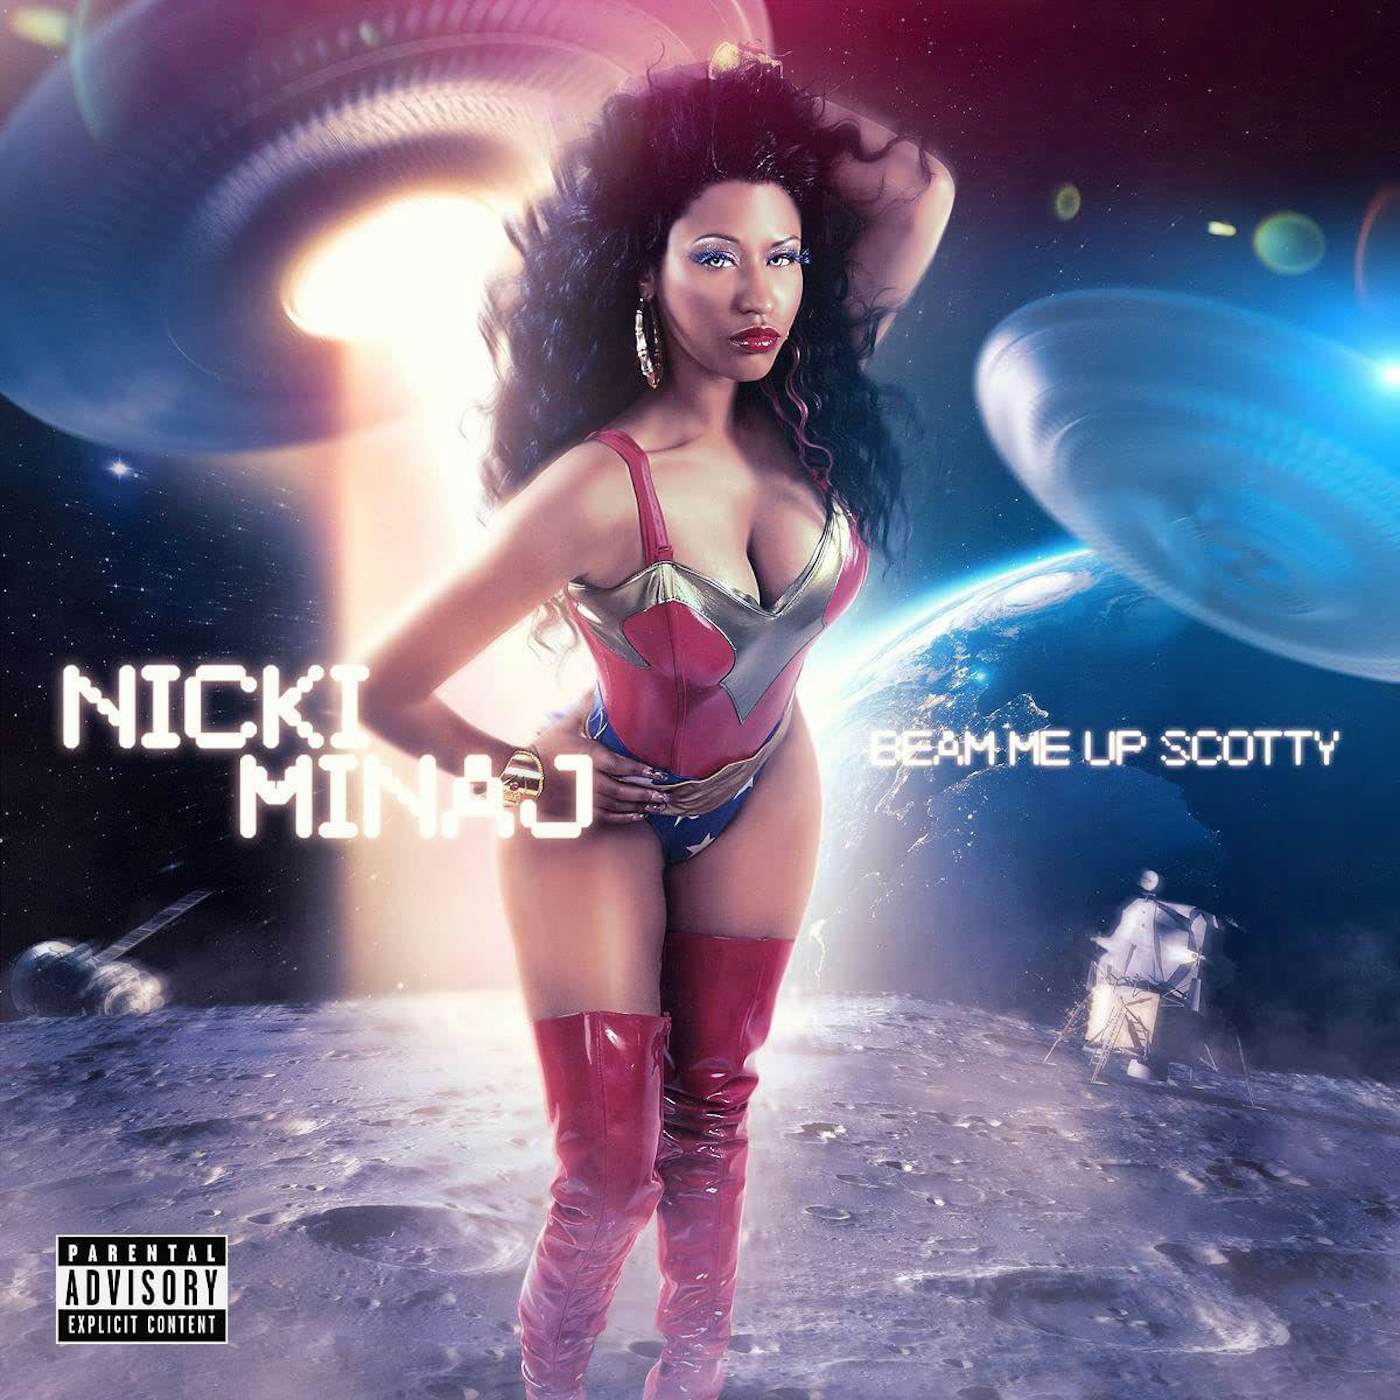 Nicki Minaj Beam Me Up Scotty Vinyl Record